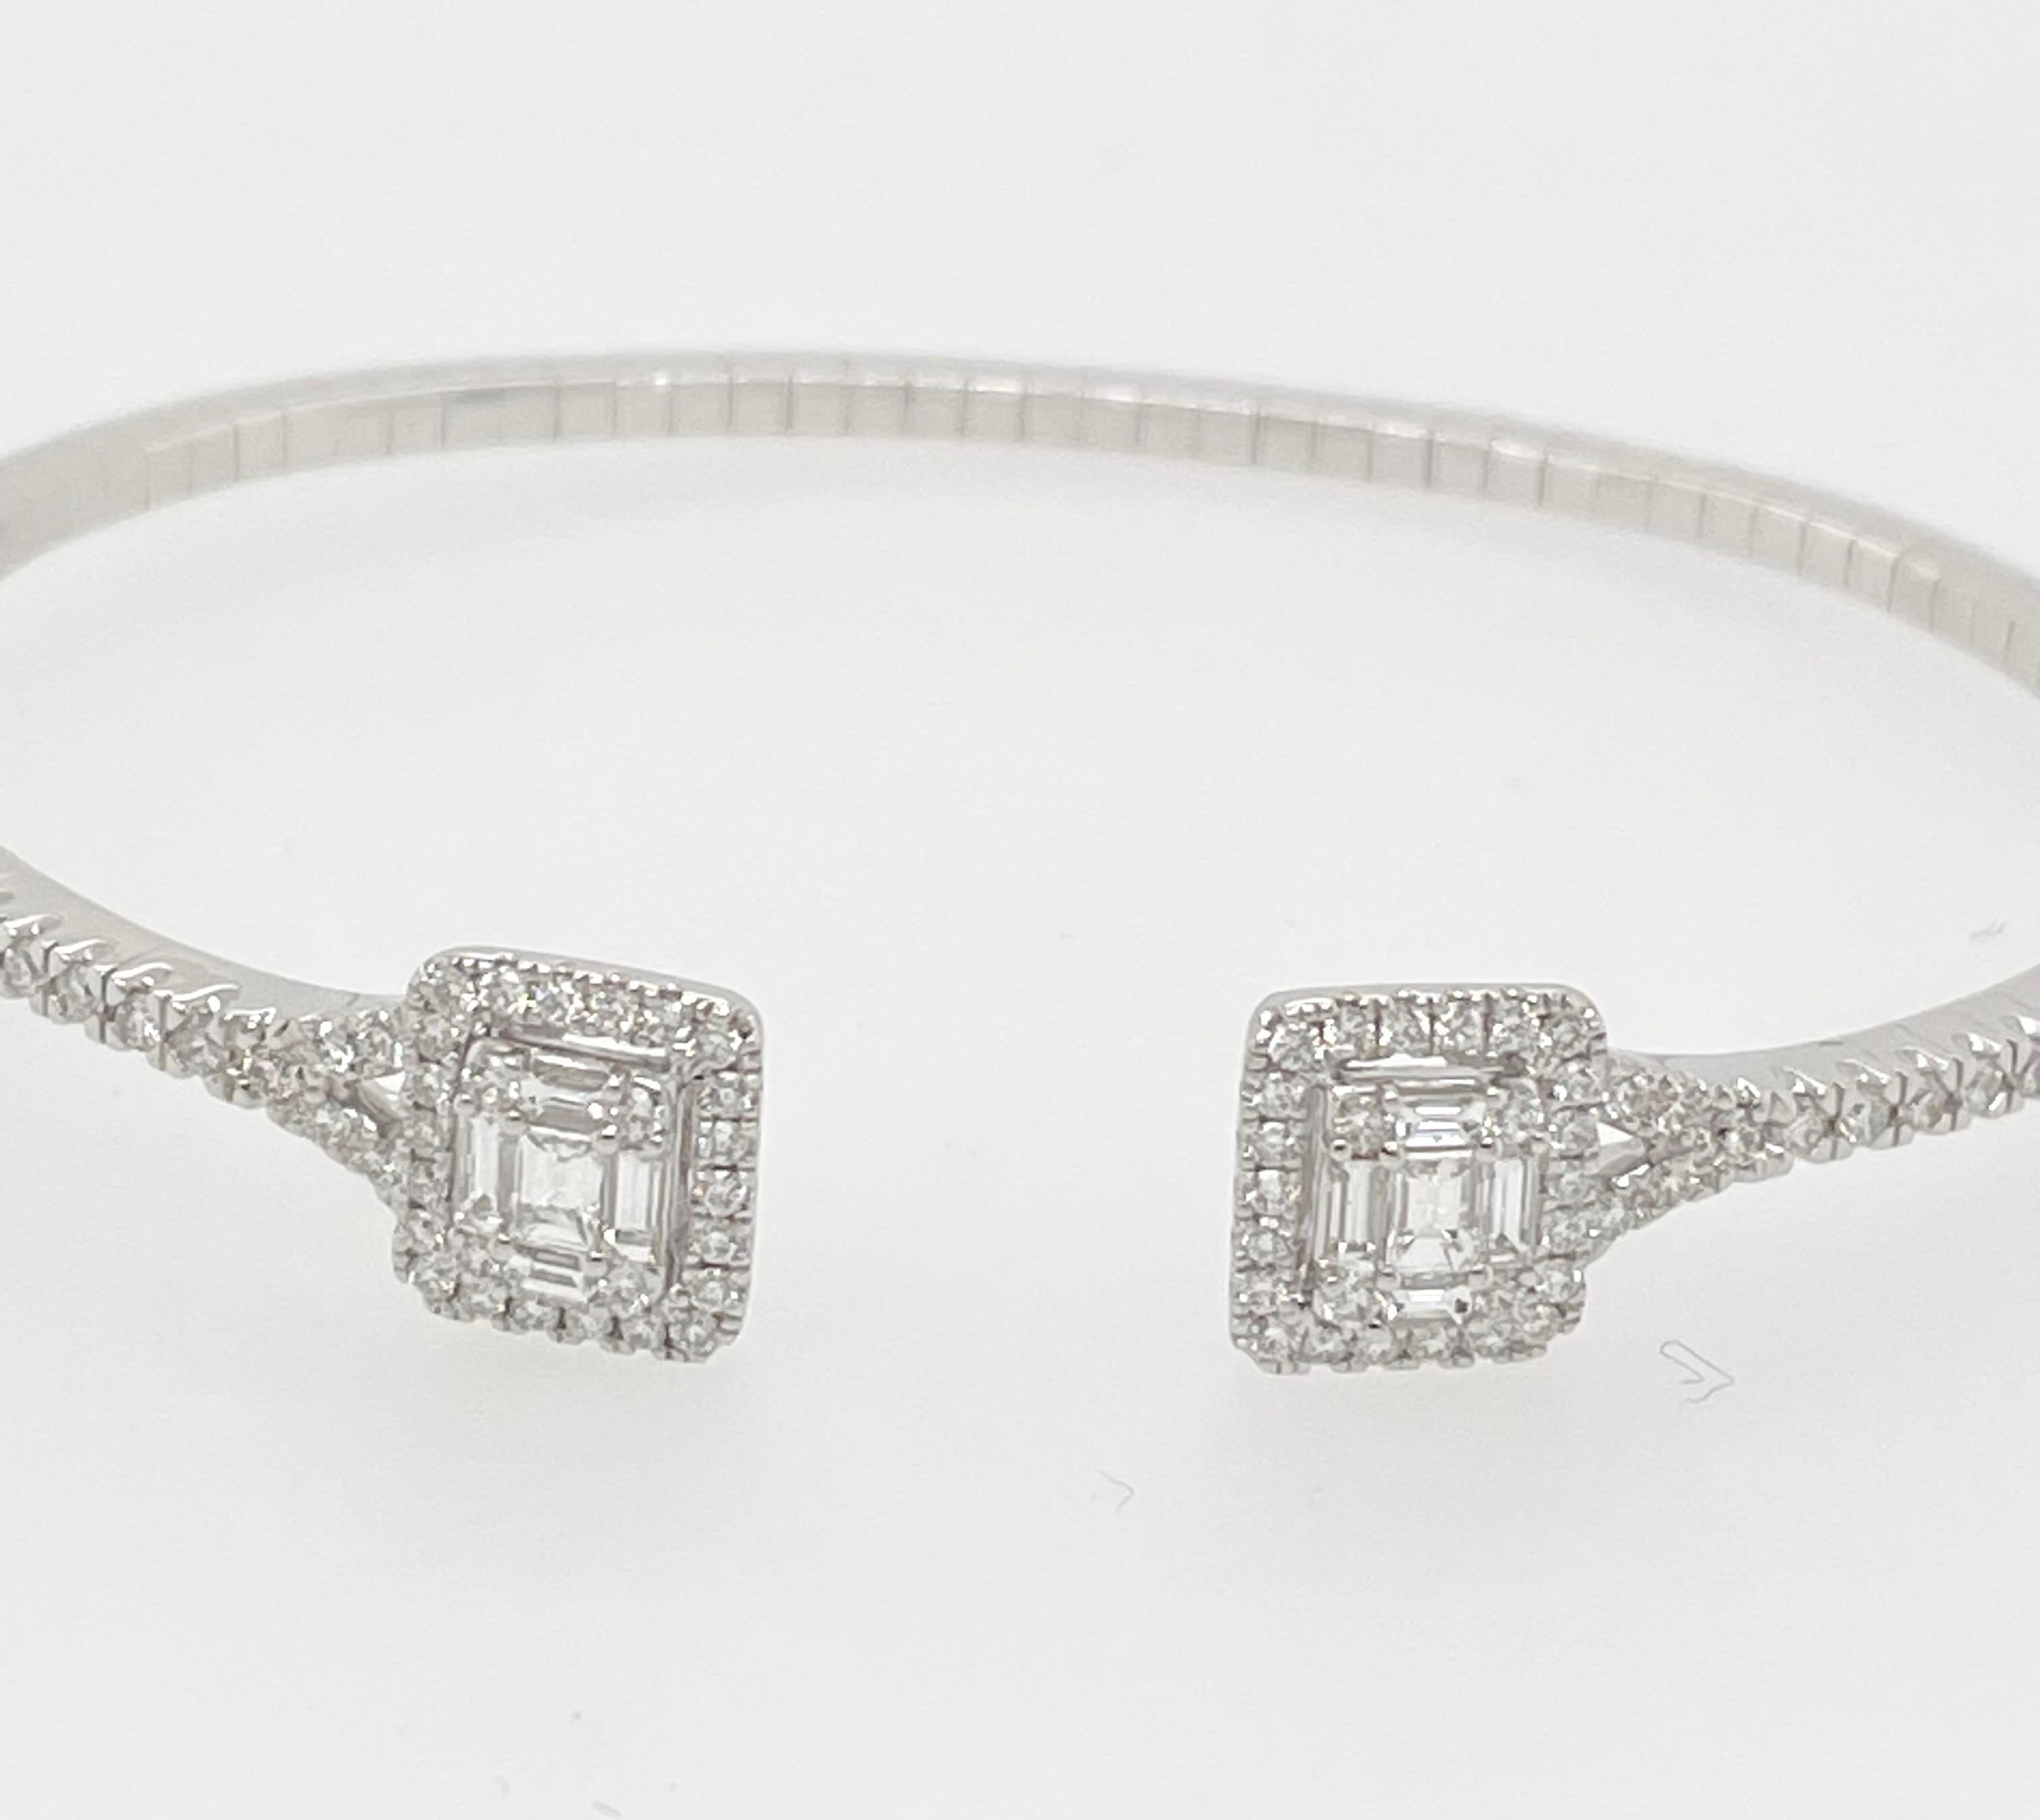 A stunning White Diamond Bangle Bracelet set in 18K White Gold accompanied by 1.28 carats of white round diamonds and emerald cut diamonds. 